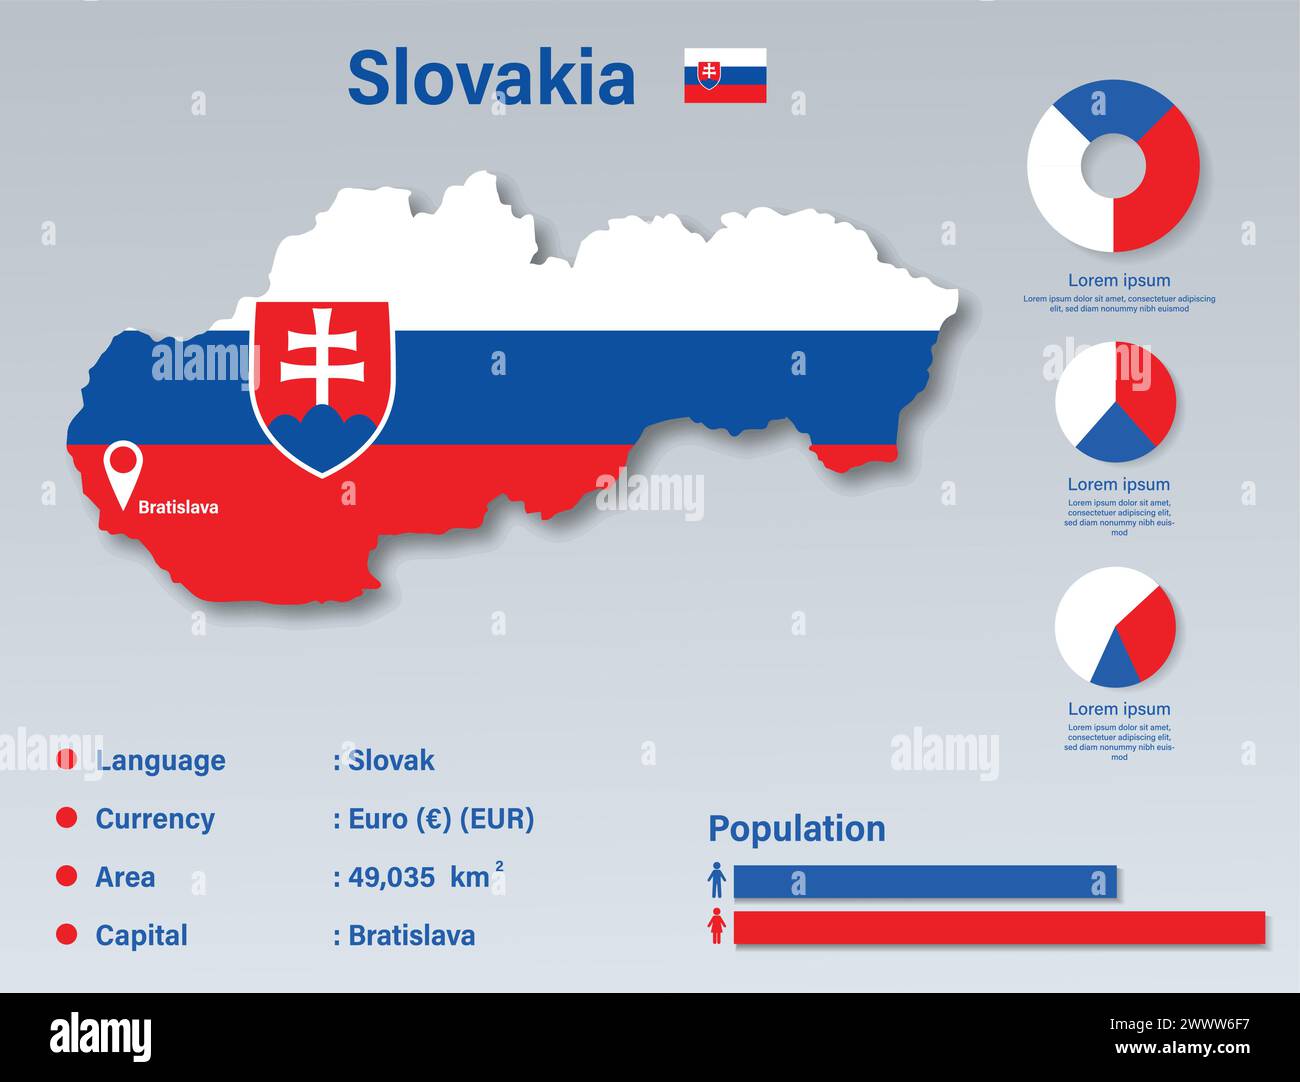 Slovakia Infographic Vector Illustration, Slovakia Statistical Data Element, Slovakia Information Board With Flag Map, Slovakia Map Flag Flat Design Stock Vector